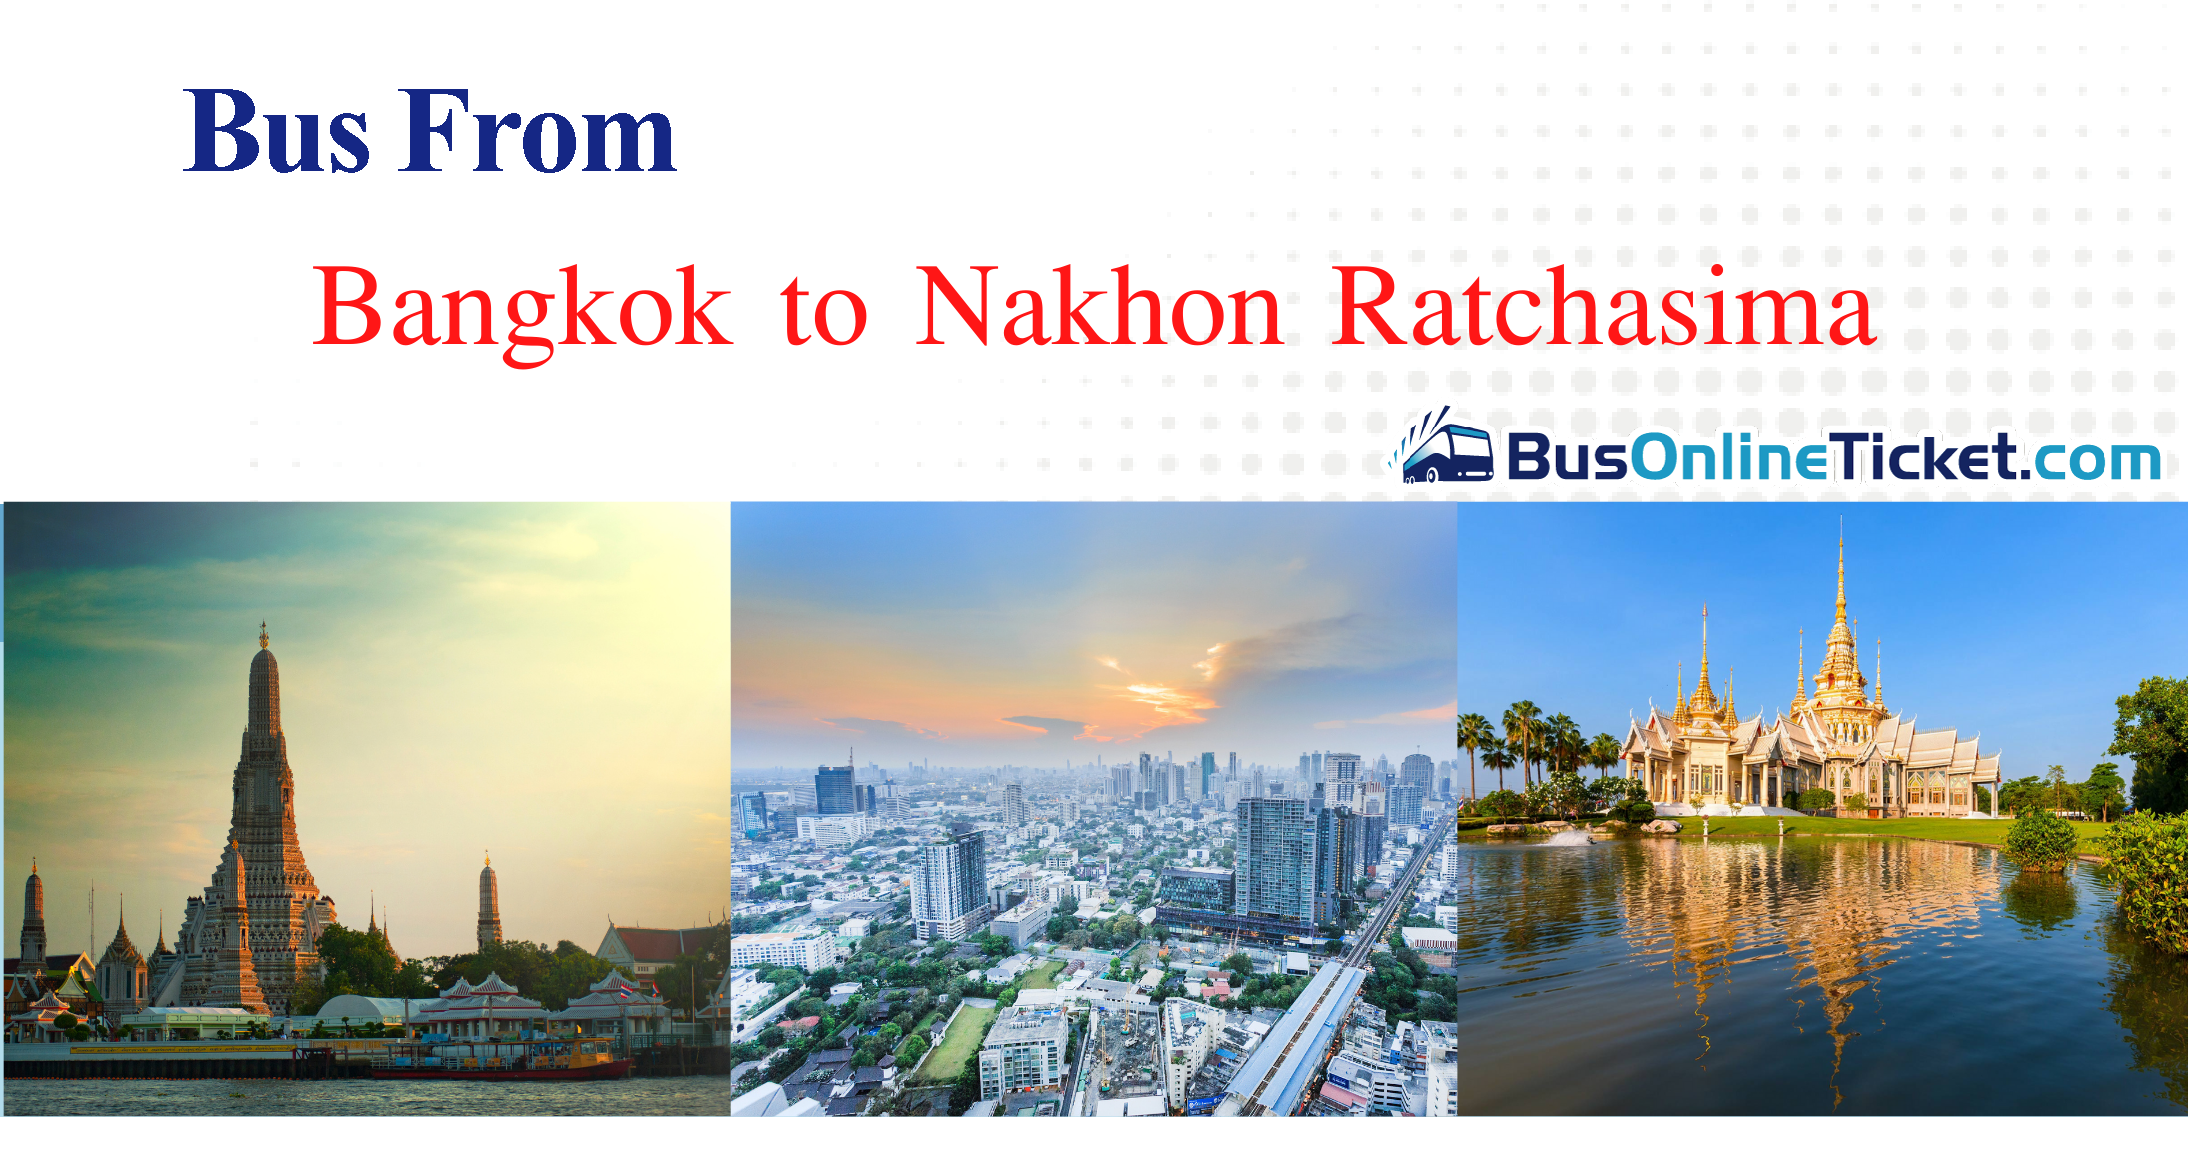 Bangkok to Nakhon Ratchasima